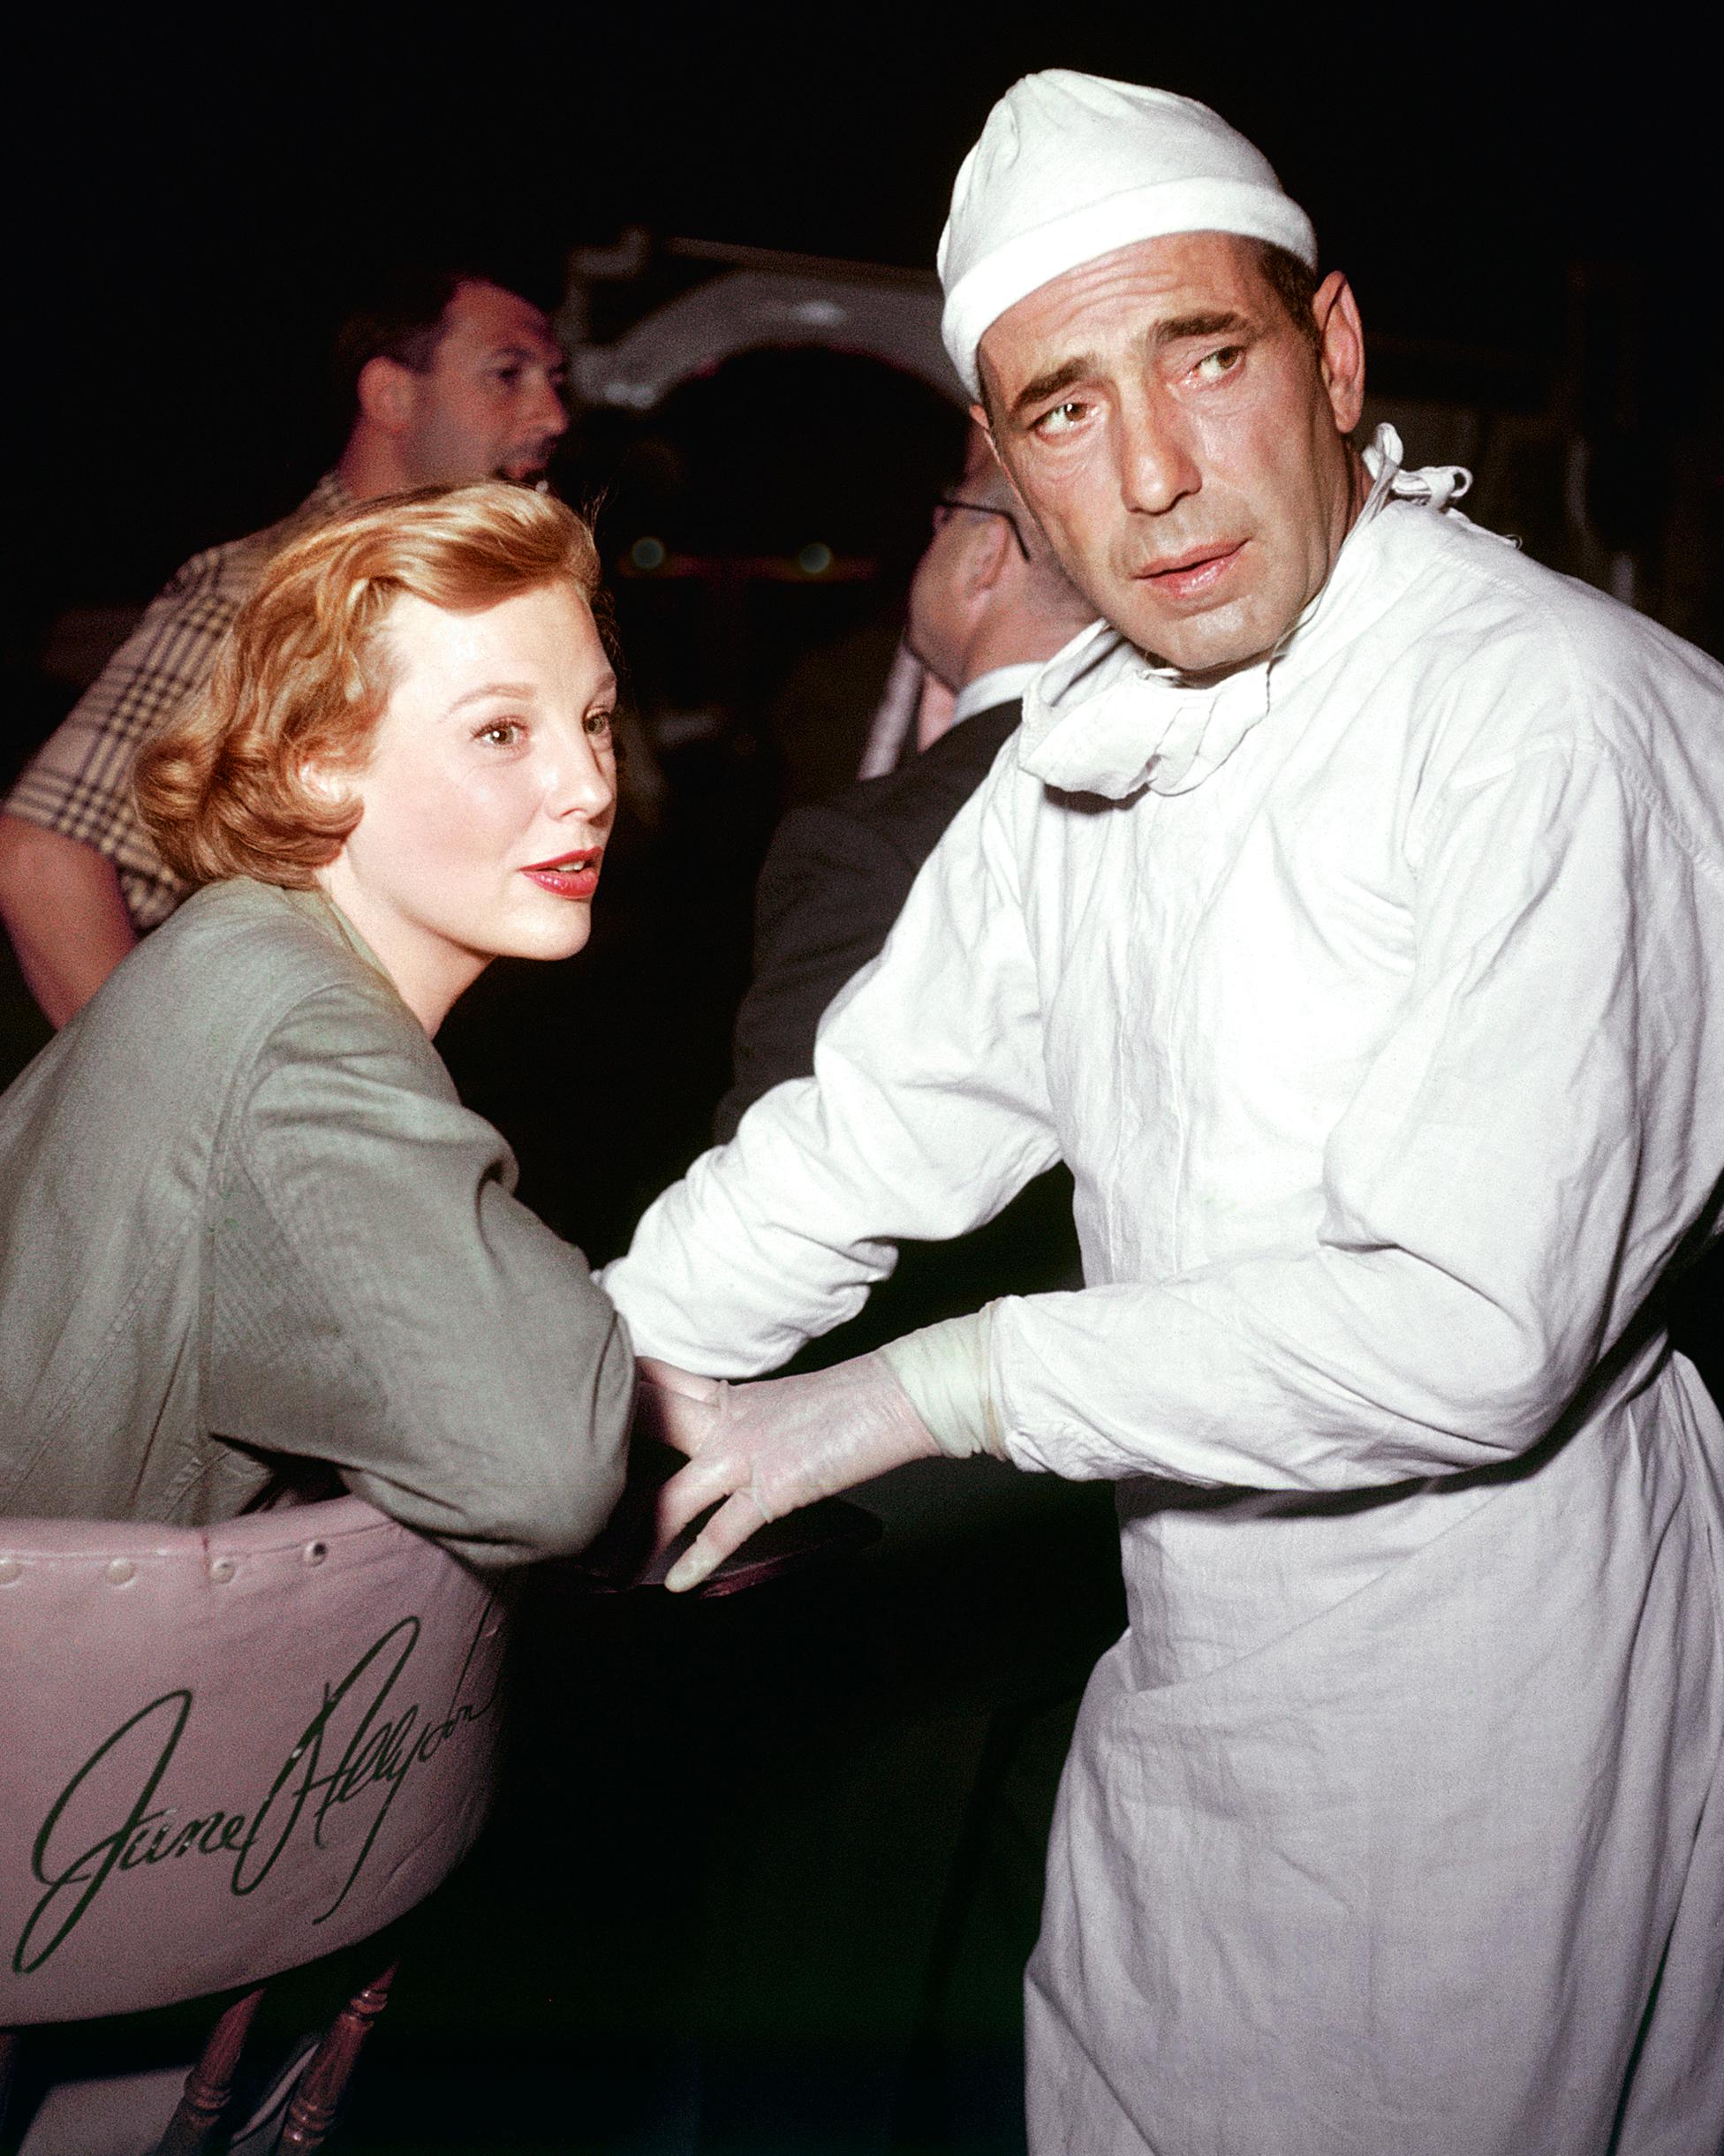 Frank Worth Portrait Photograph - Humphrey Bogart and June Allyson on Set